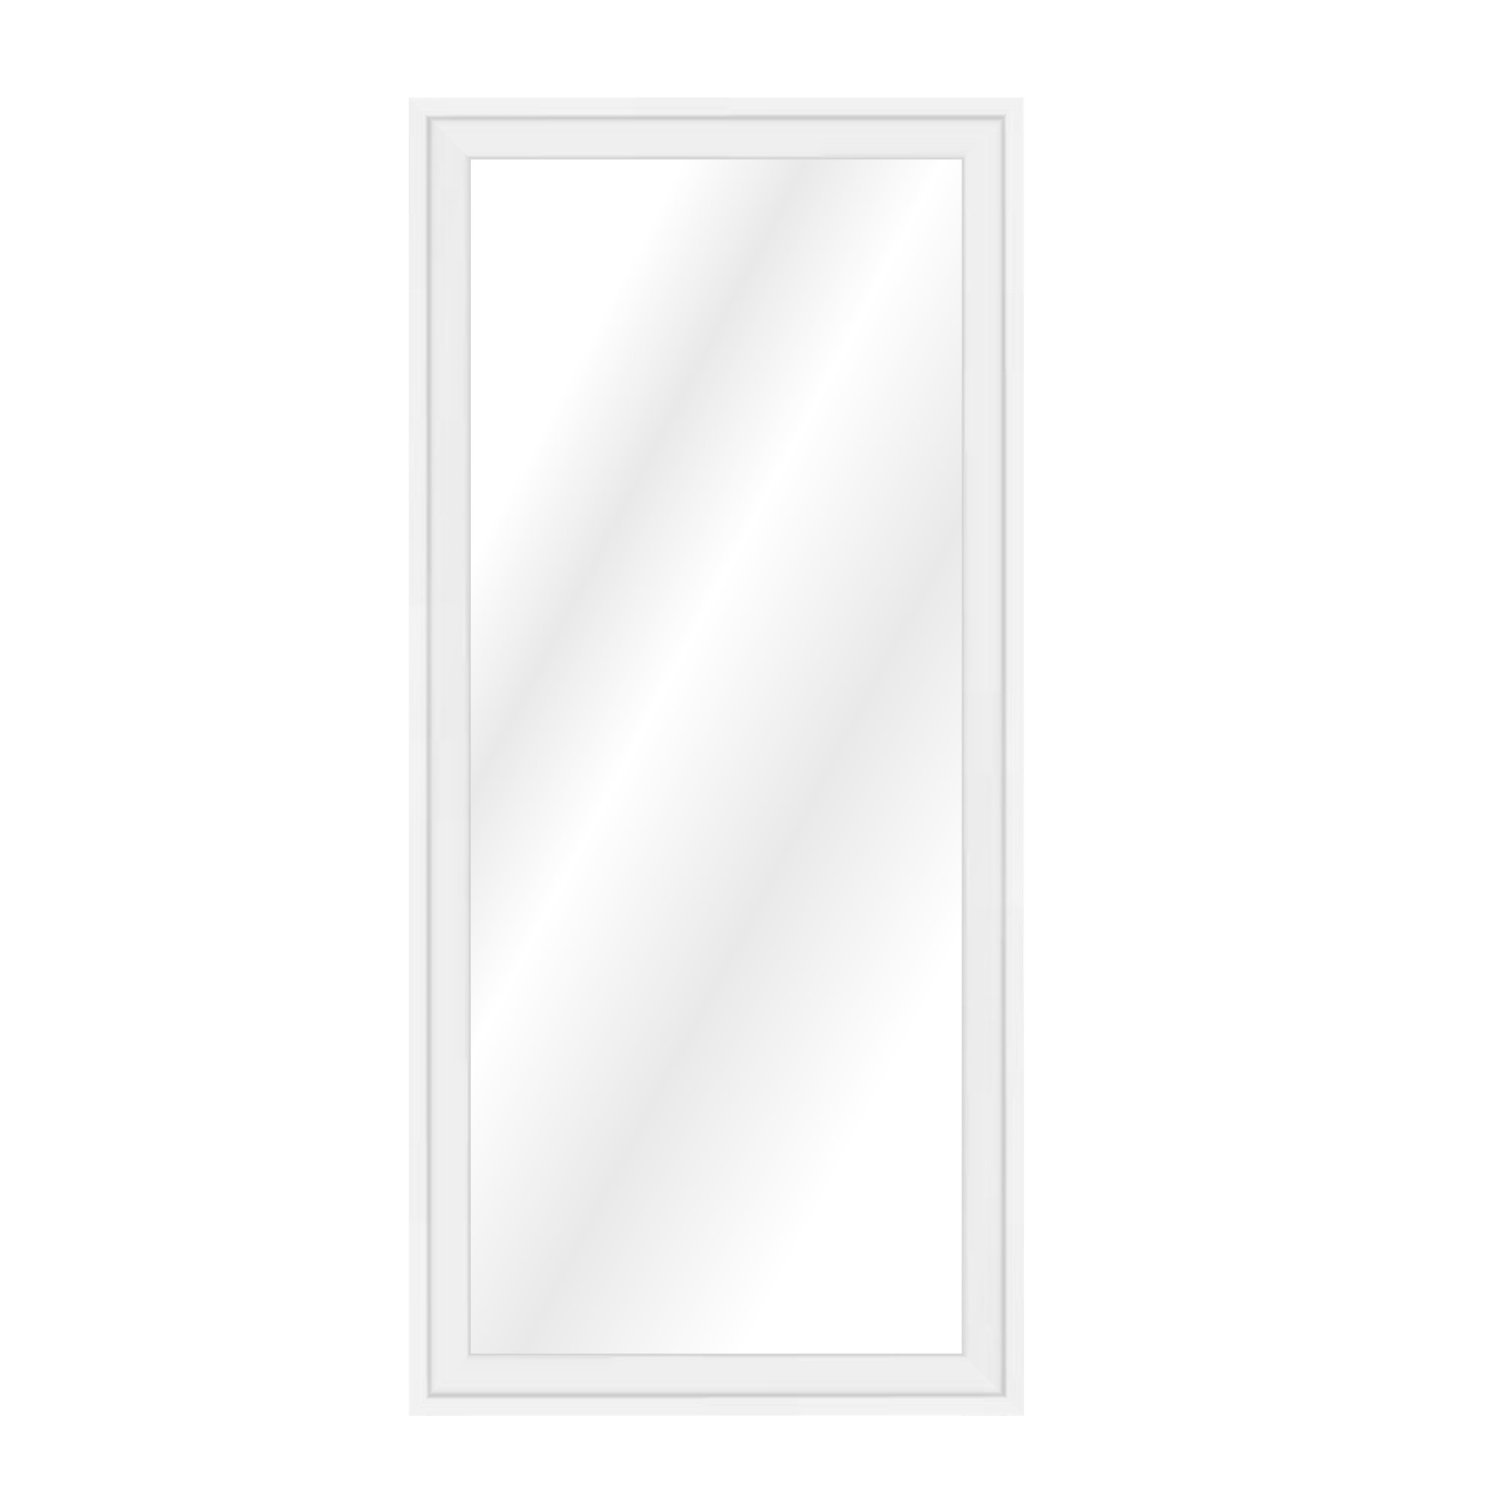 Espelho Elegant 150br 70cm X 150cm